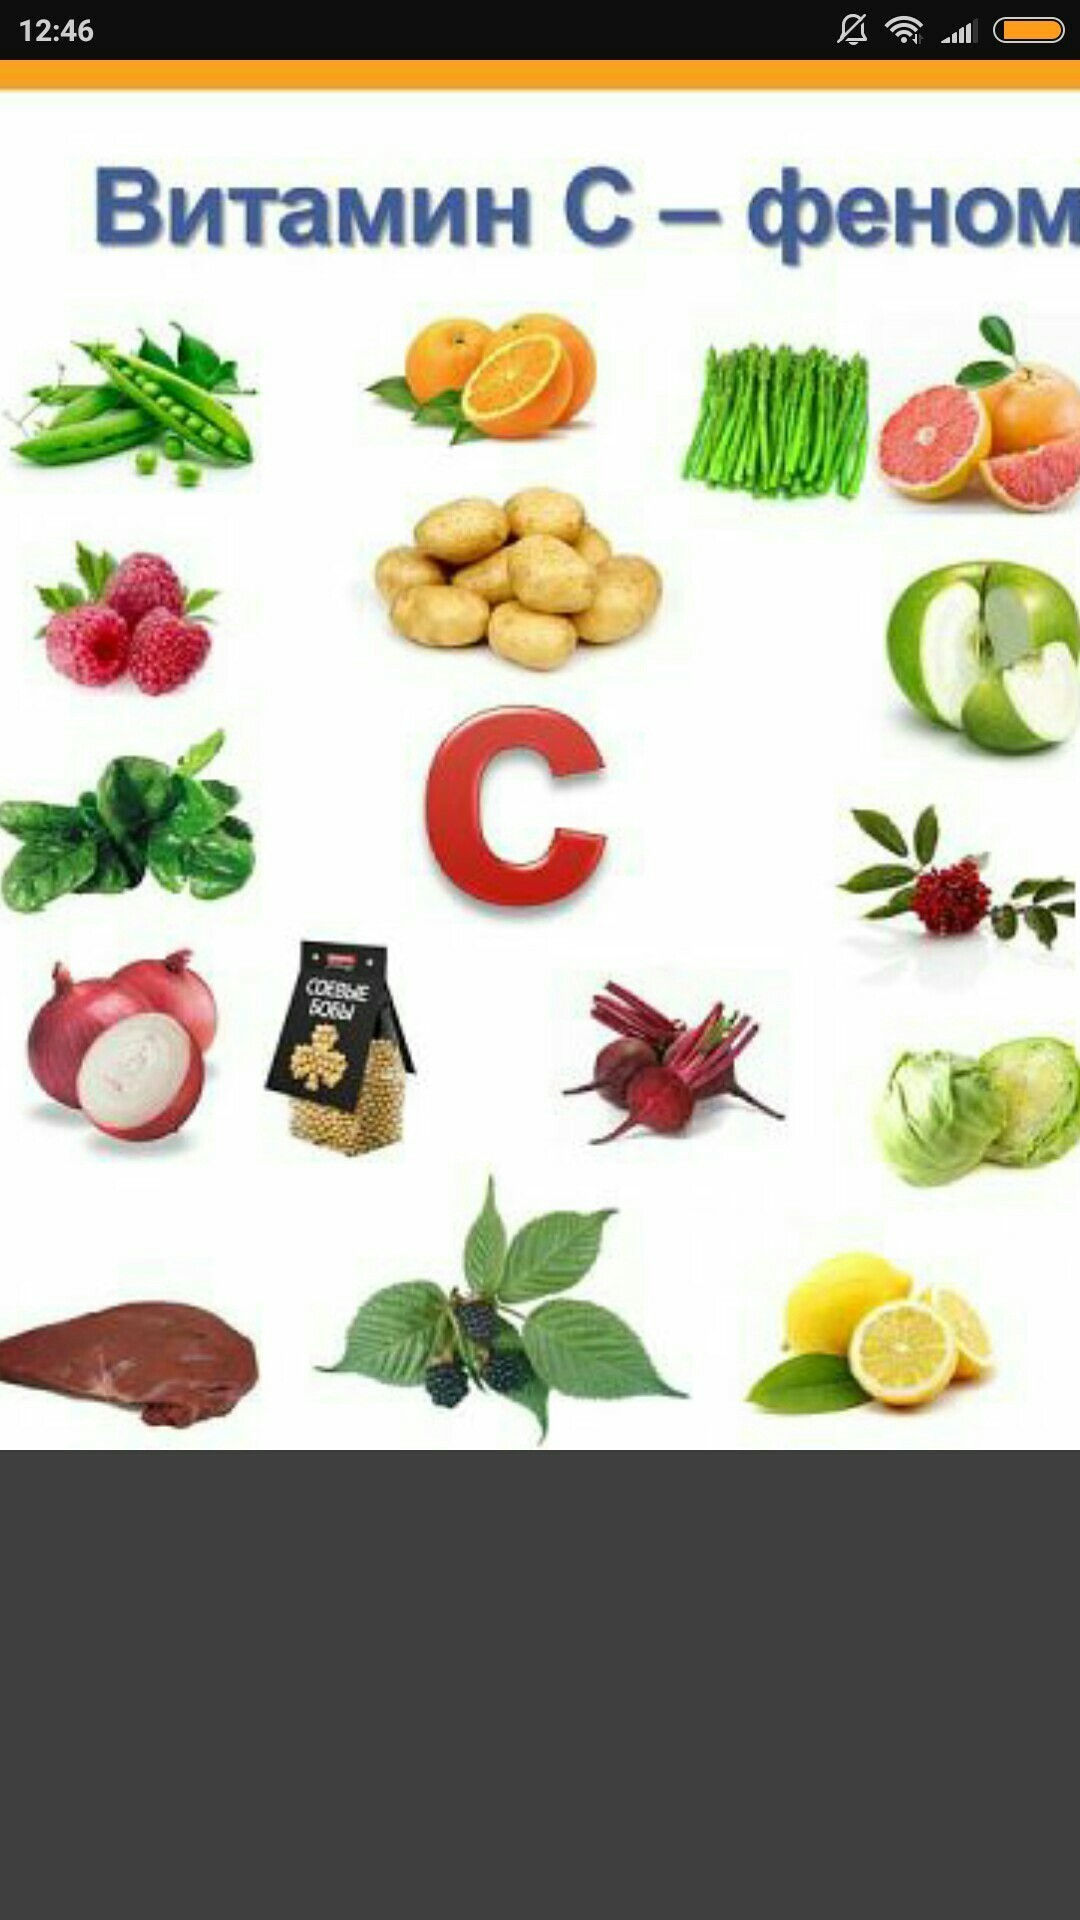 Овощи витамин b. Витамины в фруктах. Что такое витамины. Овощи и фрукты с витамином c. Витамины в овощах.